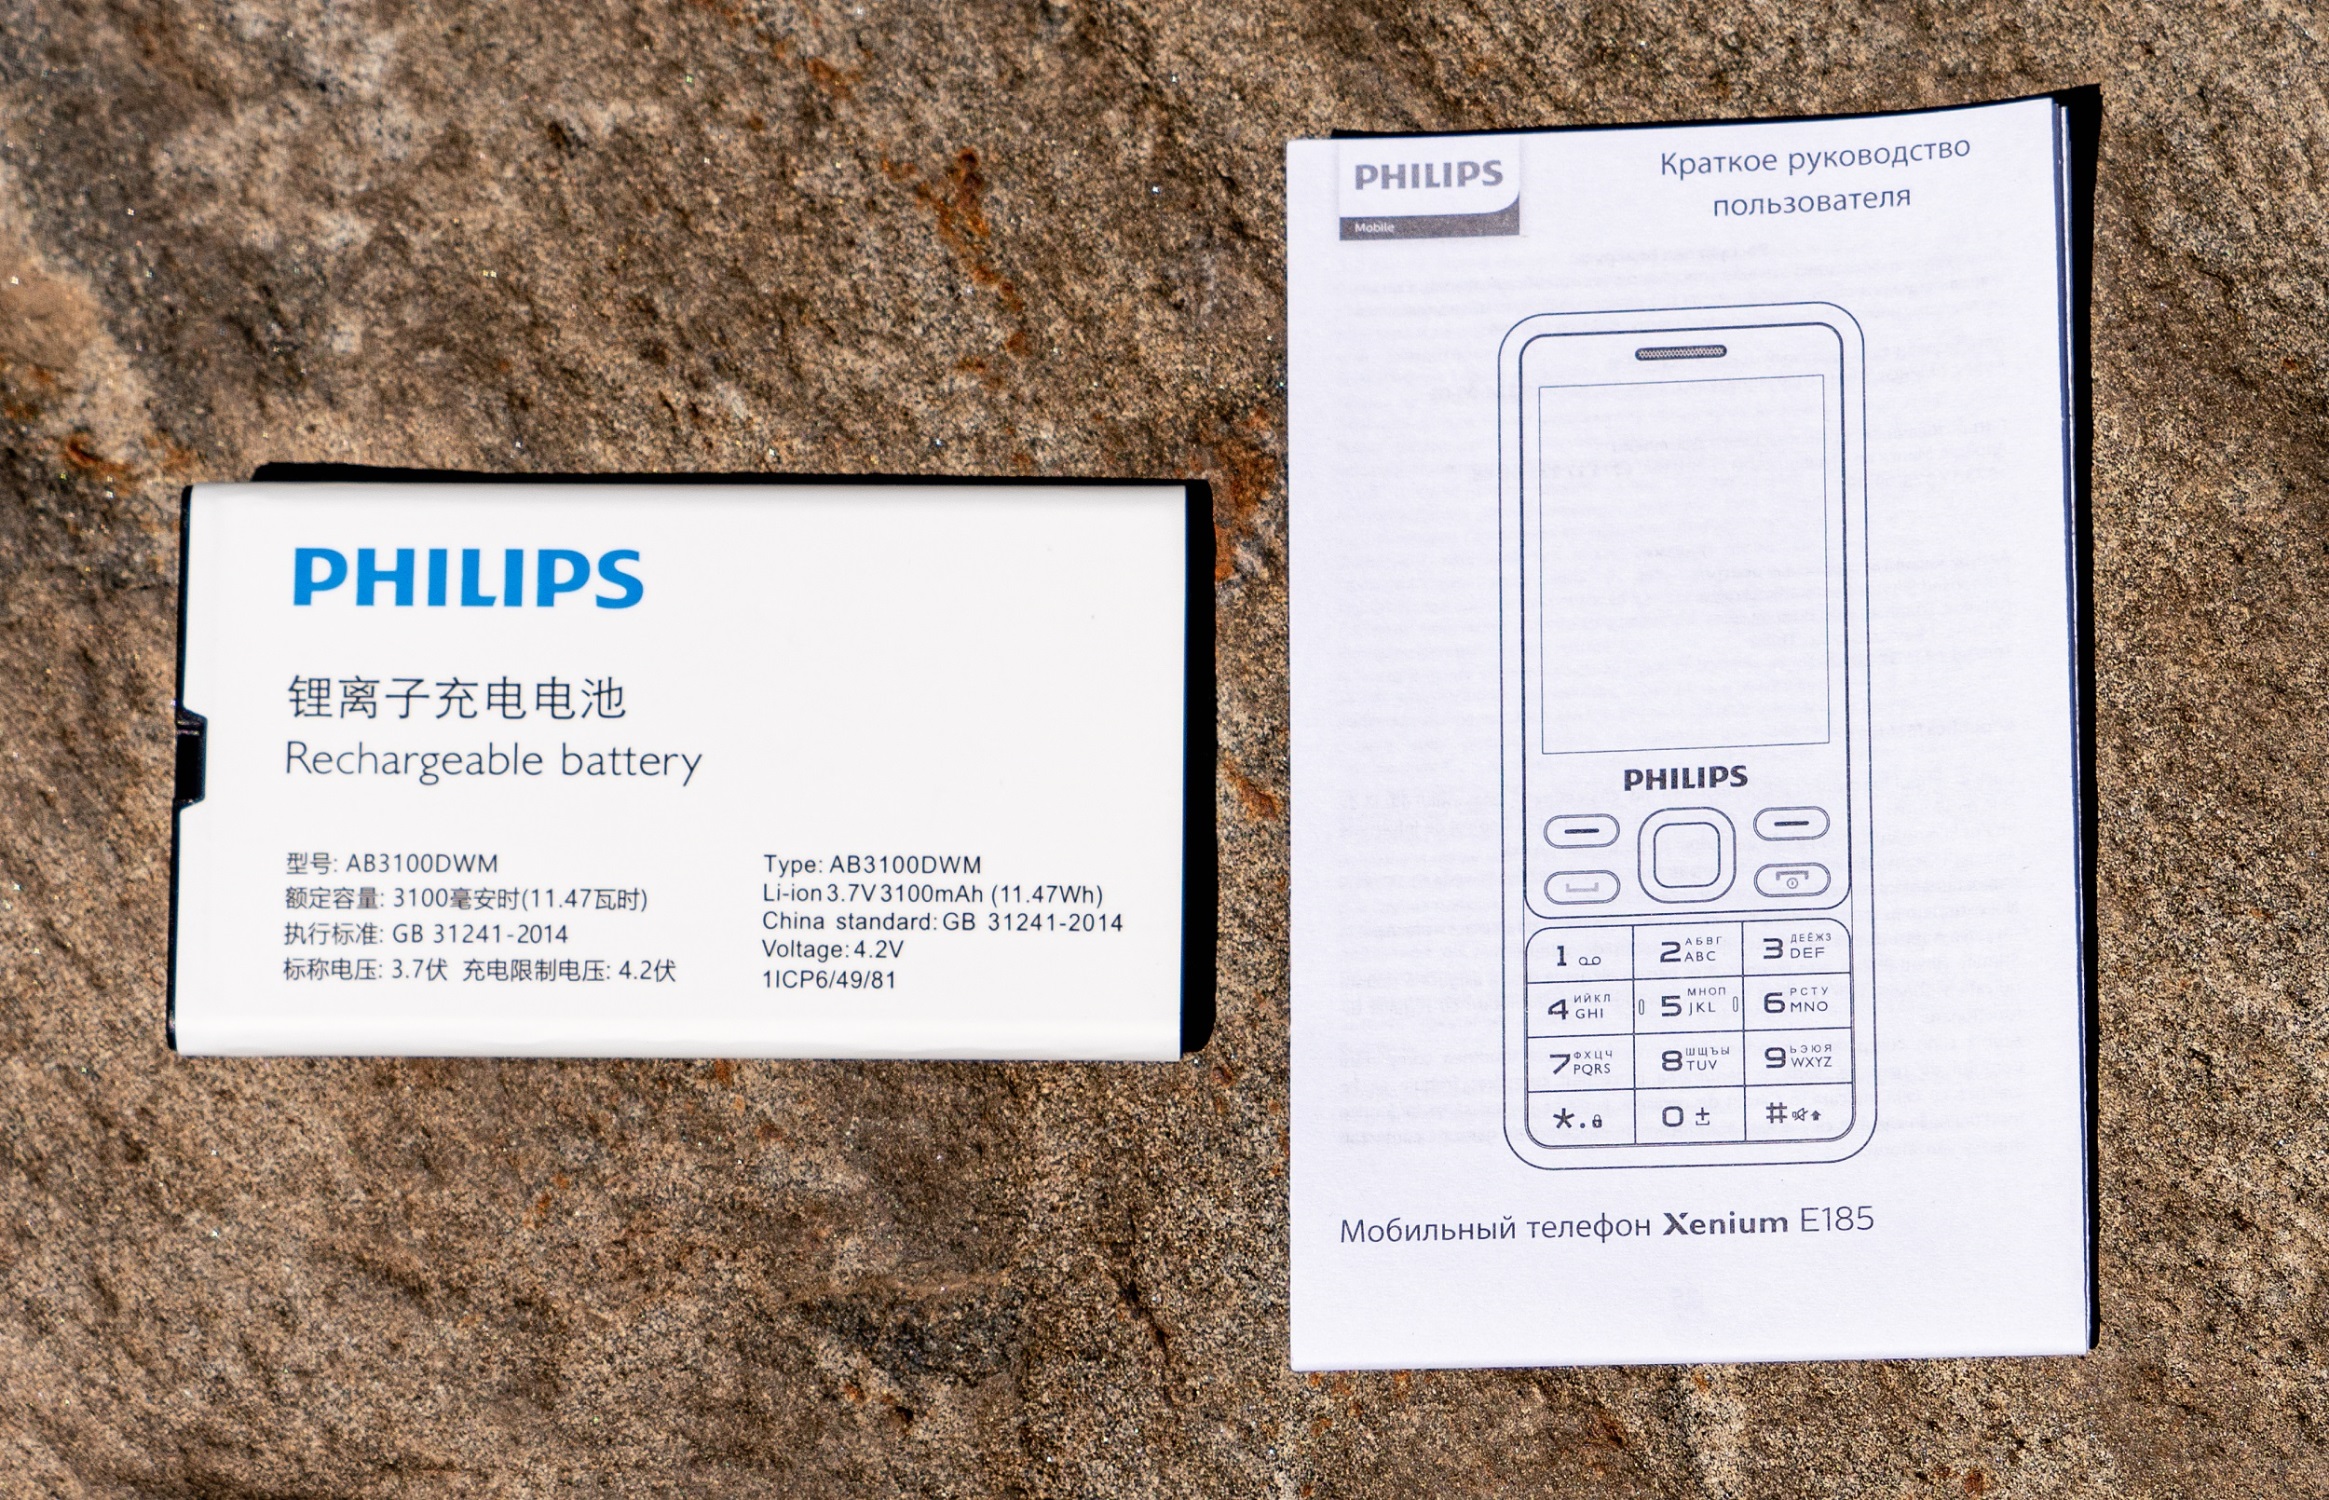 Xenium e185 black. Philips Xenium e185. Телефон Philips Xenium e185. Телефон Philips Xenium e185 меню. Xenium инструкция.